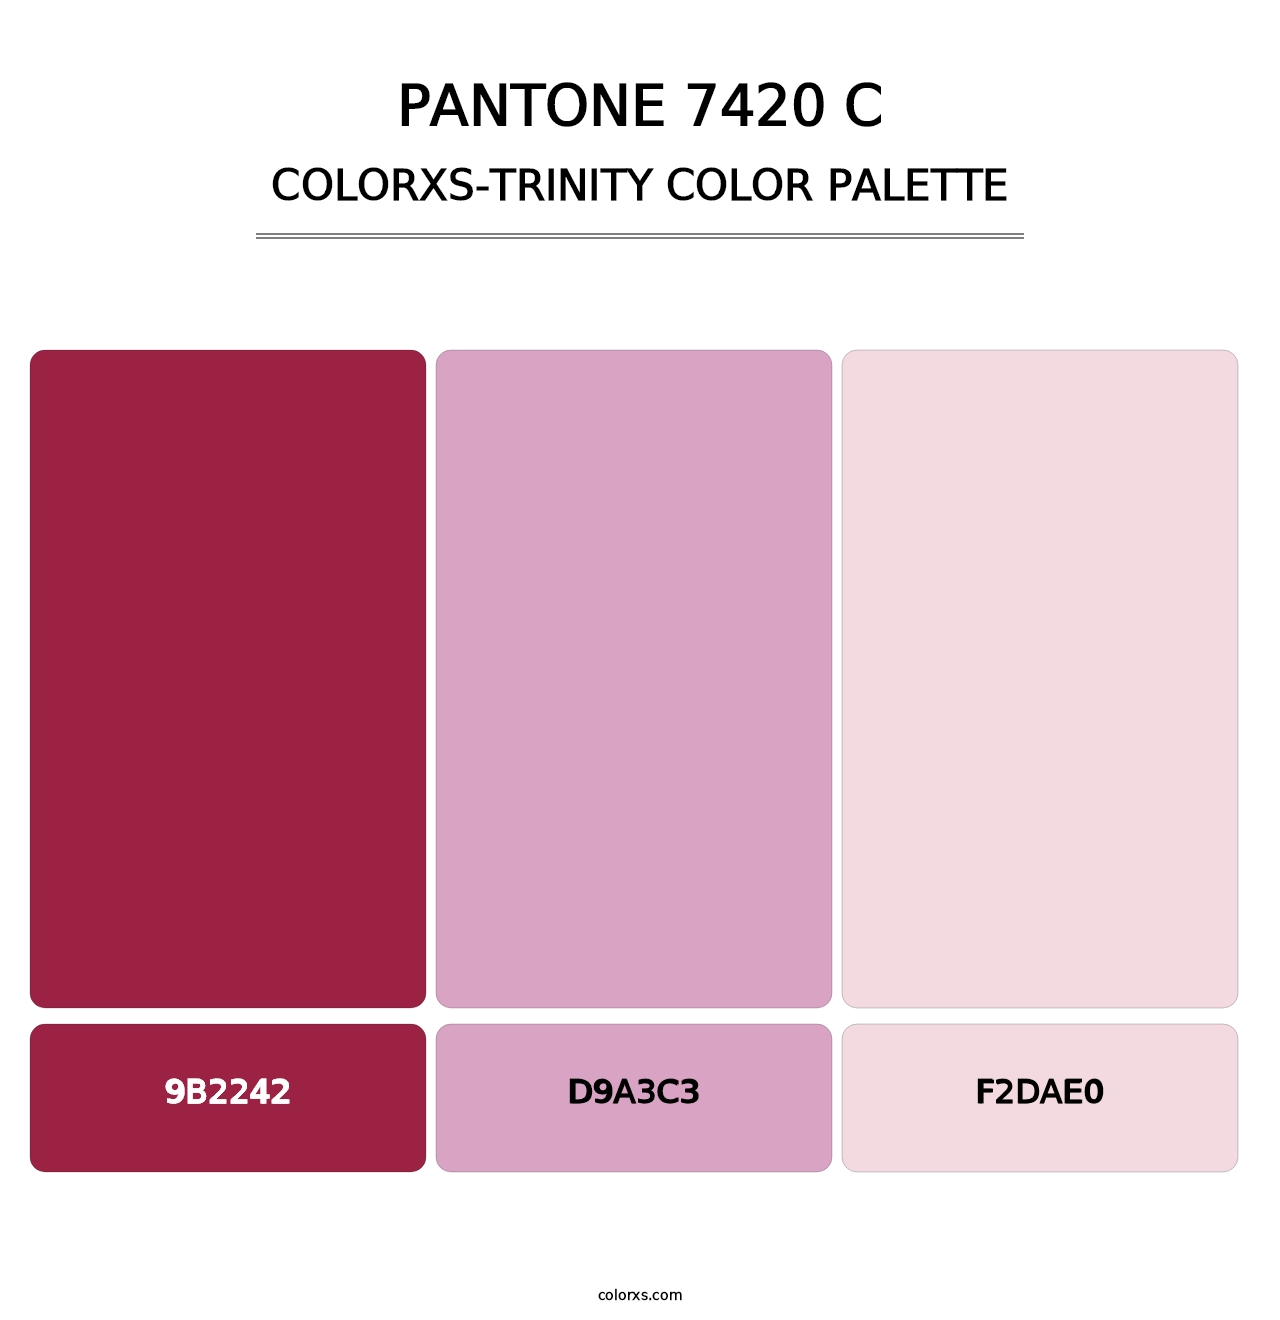 PANTONE 7420 C - Colorxs Trinity Palette